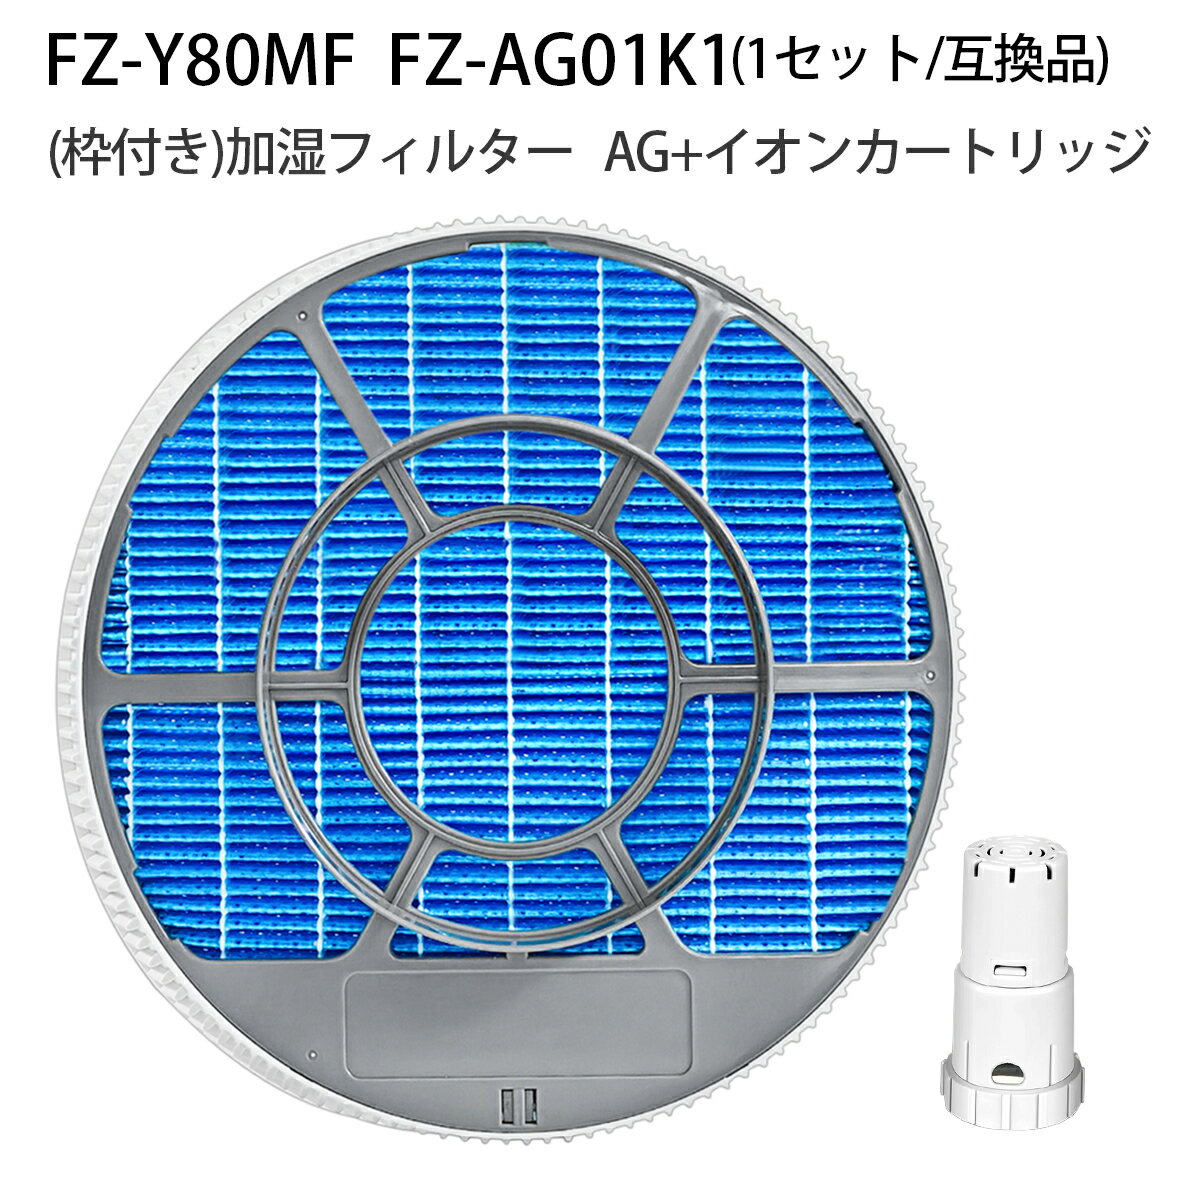 FZ-Y80MF FZ-AG01K1 シャープ イオンカー